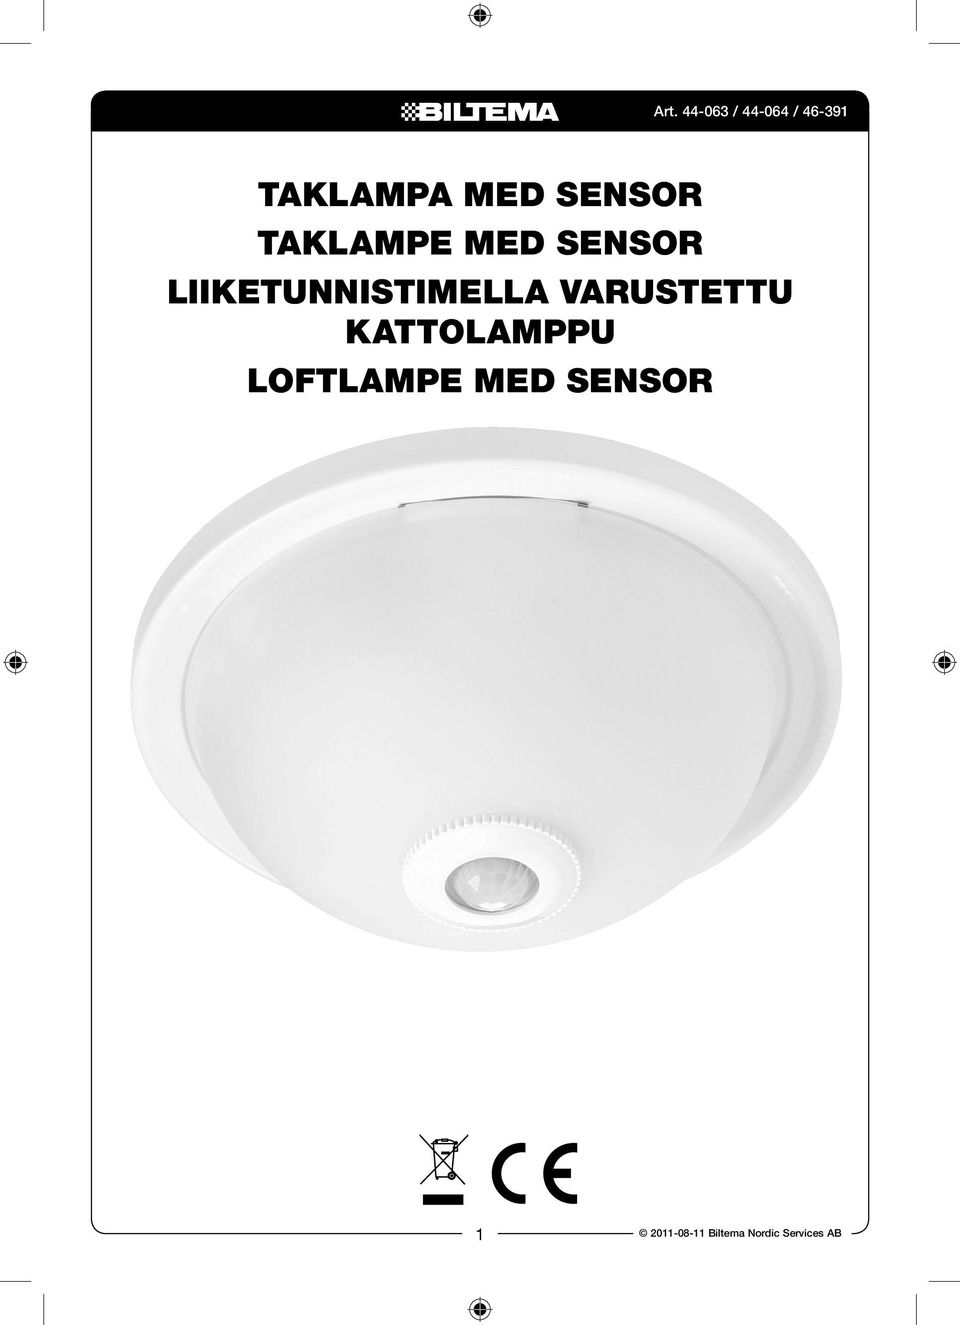 Taklampa med sensor Taklampe med sensor. Loftlampe med sensor - PDF Free  Download